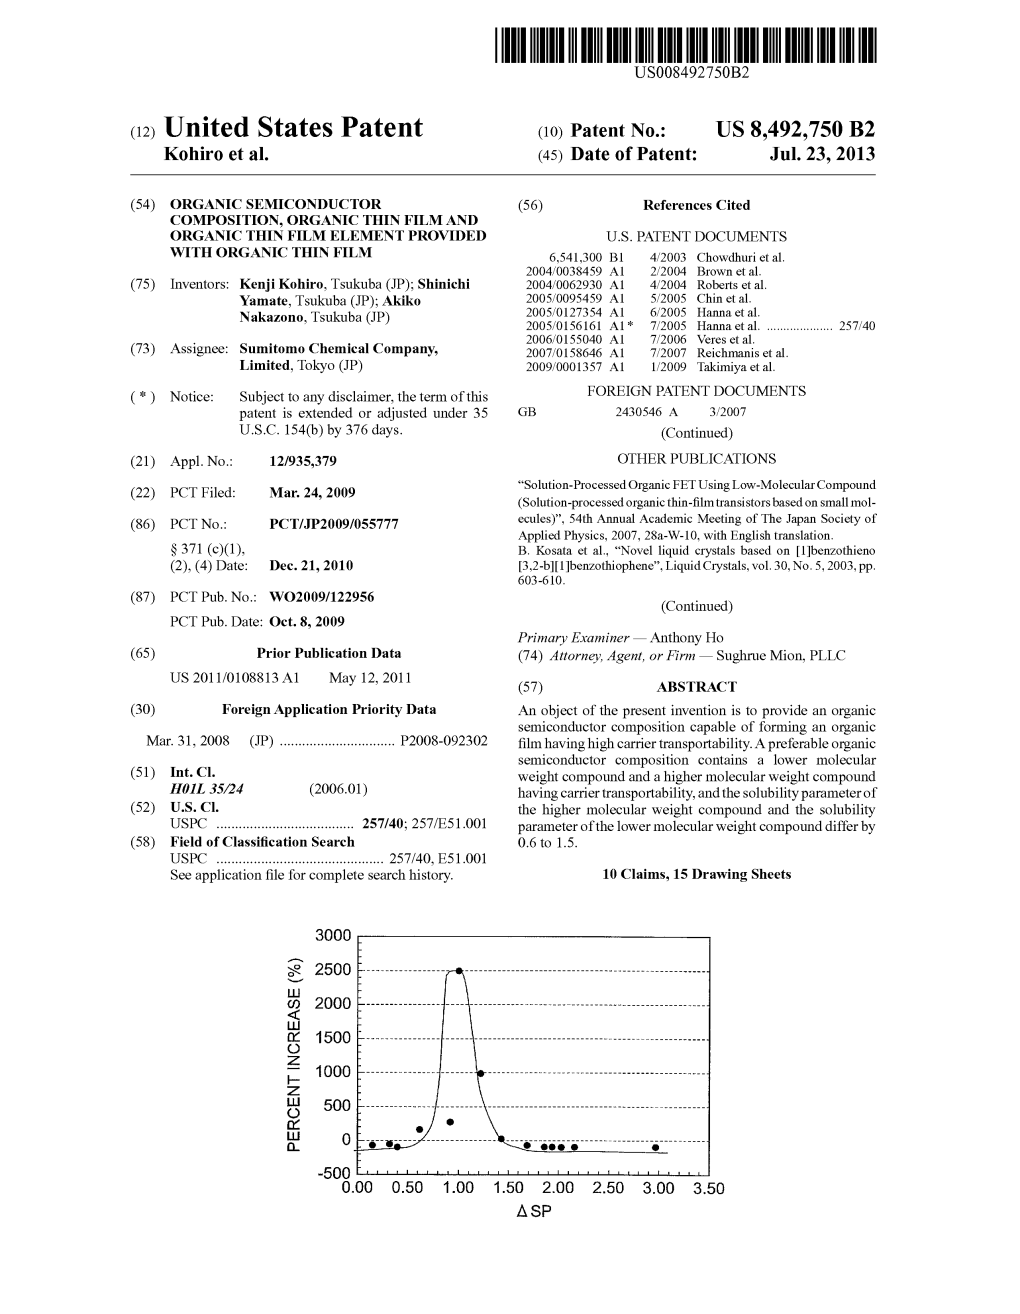 (10) Patent No.: US 8.492,750 B2 Kohiro Et Al